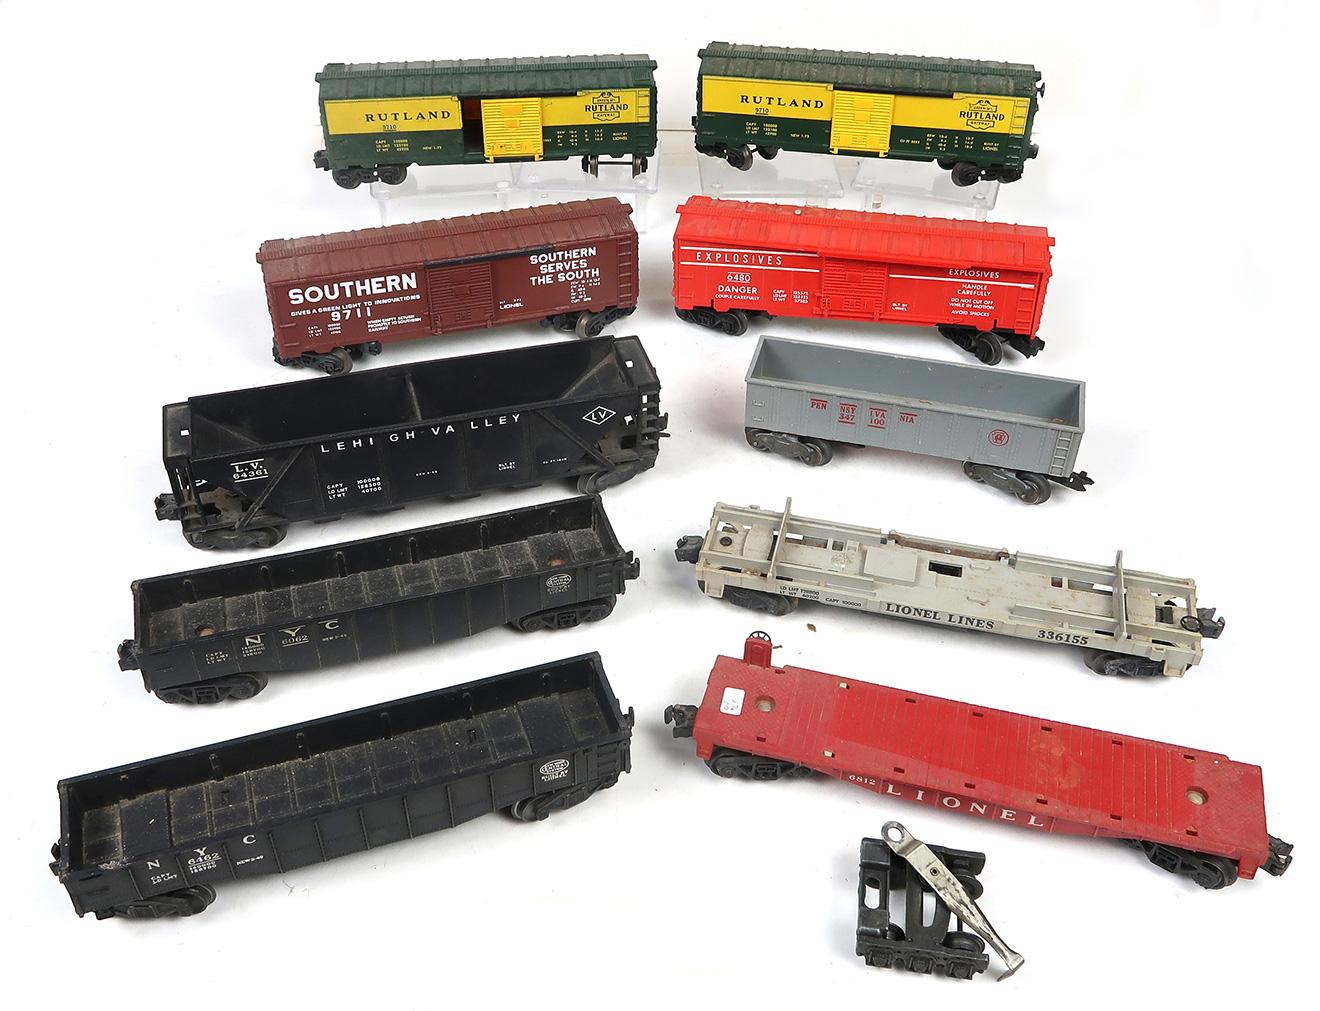 Toy Train (10), 6812 Flat Car, 336155 Gray Log Dumping Car, 6462 Black Gond